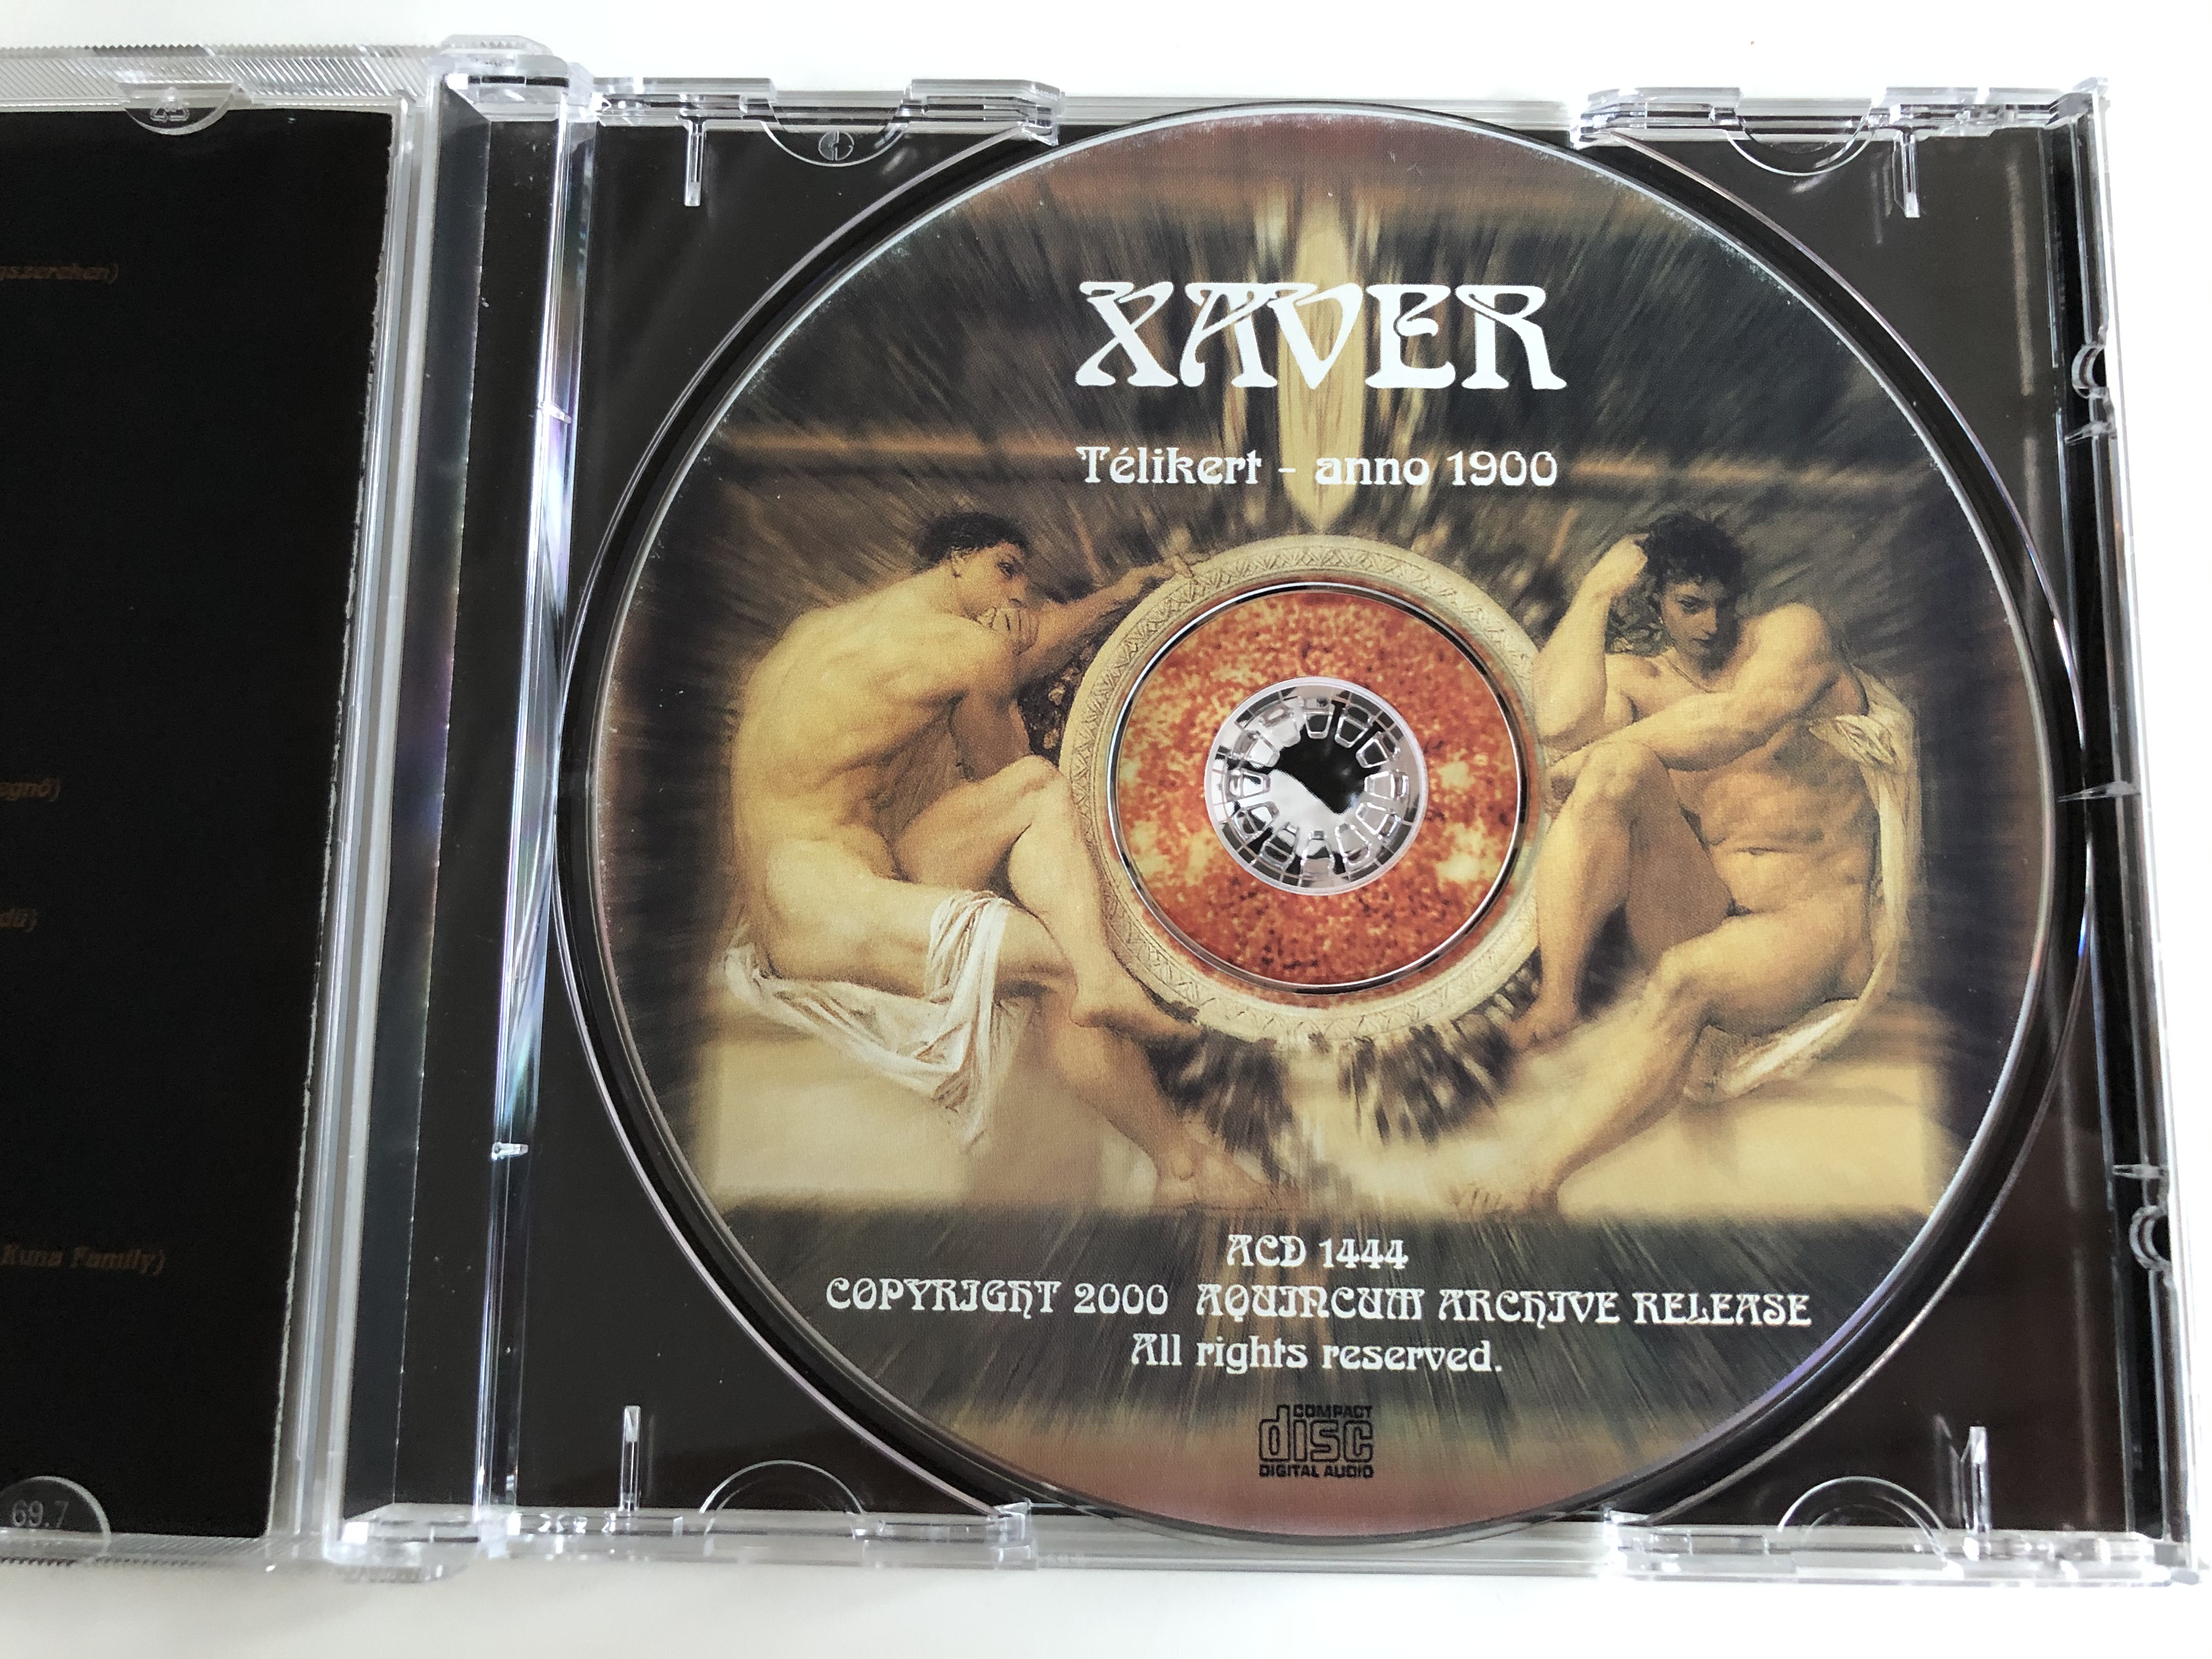 xaver-t-likert-anno-1900-aquincum-archive-audio-cd-2000-acd-1444-4-.jpg